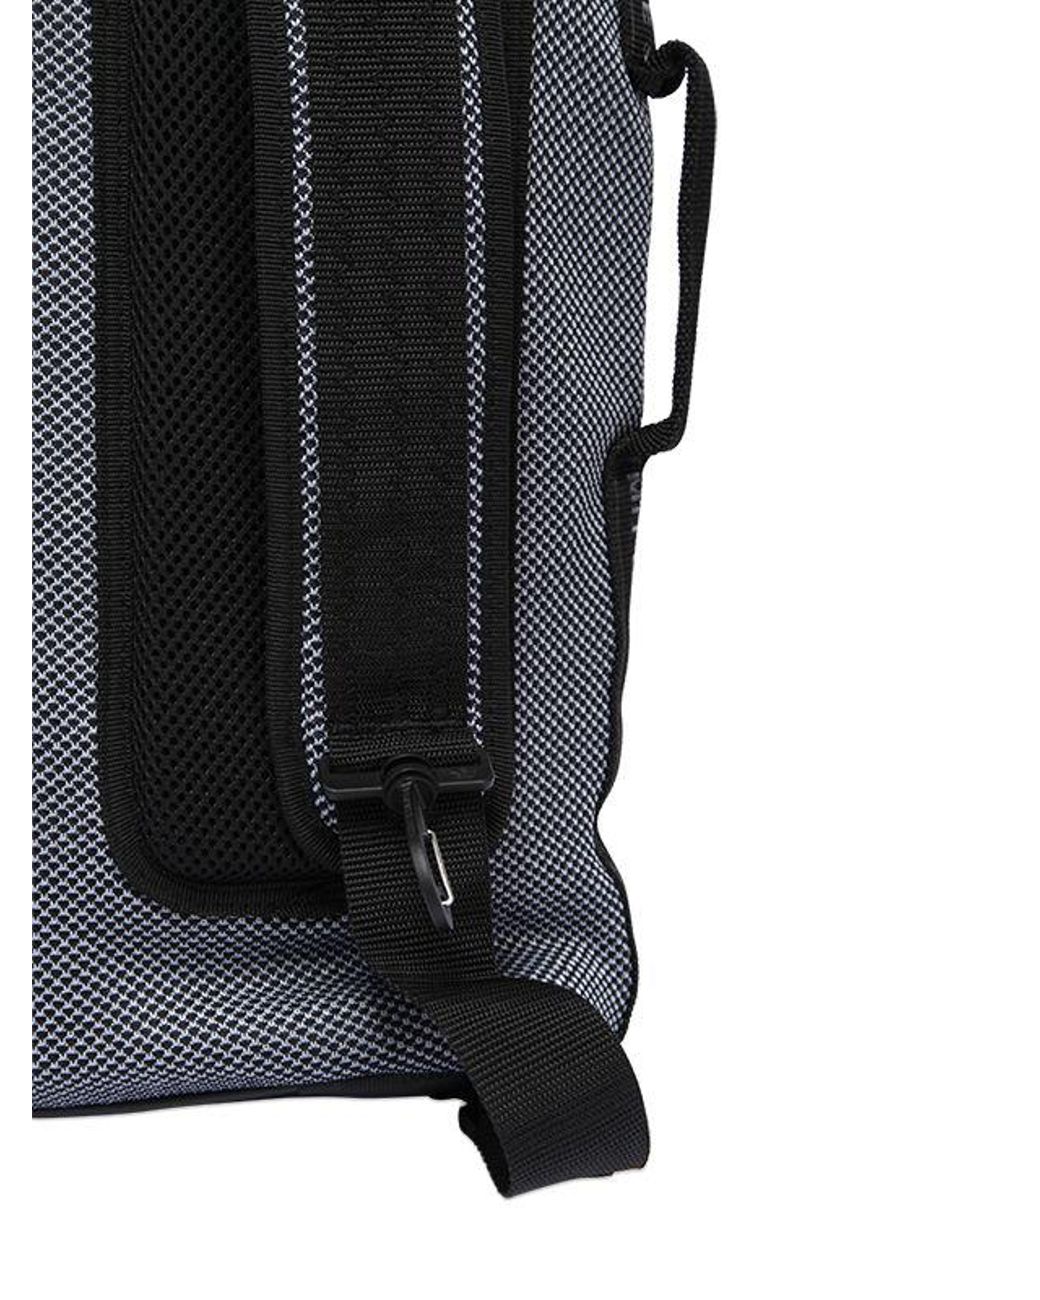 adidas Originals Nmd Primeknit Day Backpack in Black for Men | Lyst